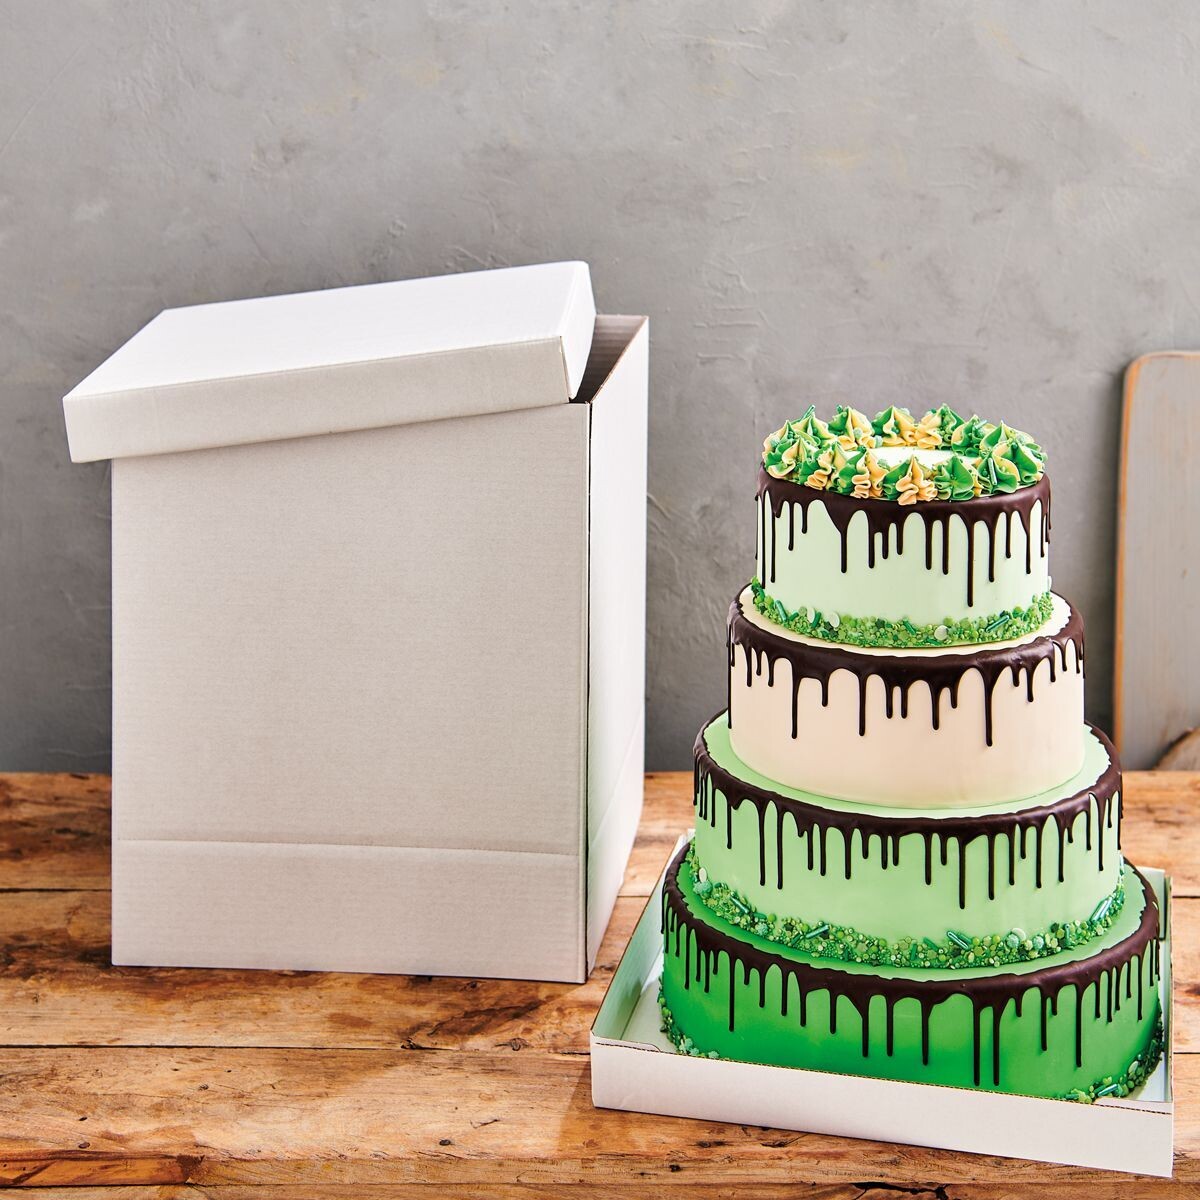 FunCakes Cake Box White 37x37x45εκ - Ψηλό Κουτί 37εκ με Ύψος 45εκ ΜΟΝΟ ΓΙΑ ΠΑΡΑΛΑΒΗ ΑΠΟ ΤΟ CAKES BY SAMANTHA